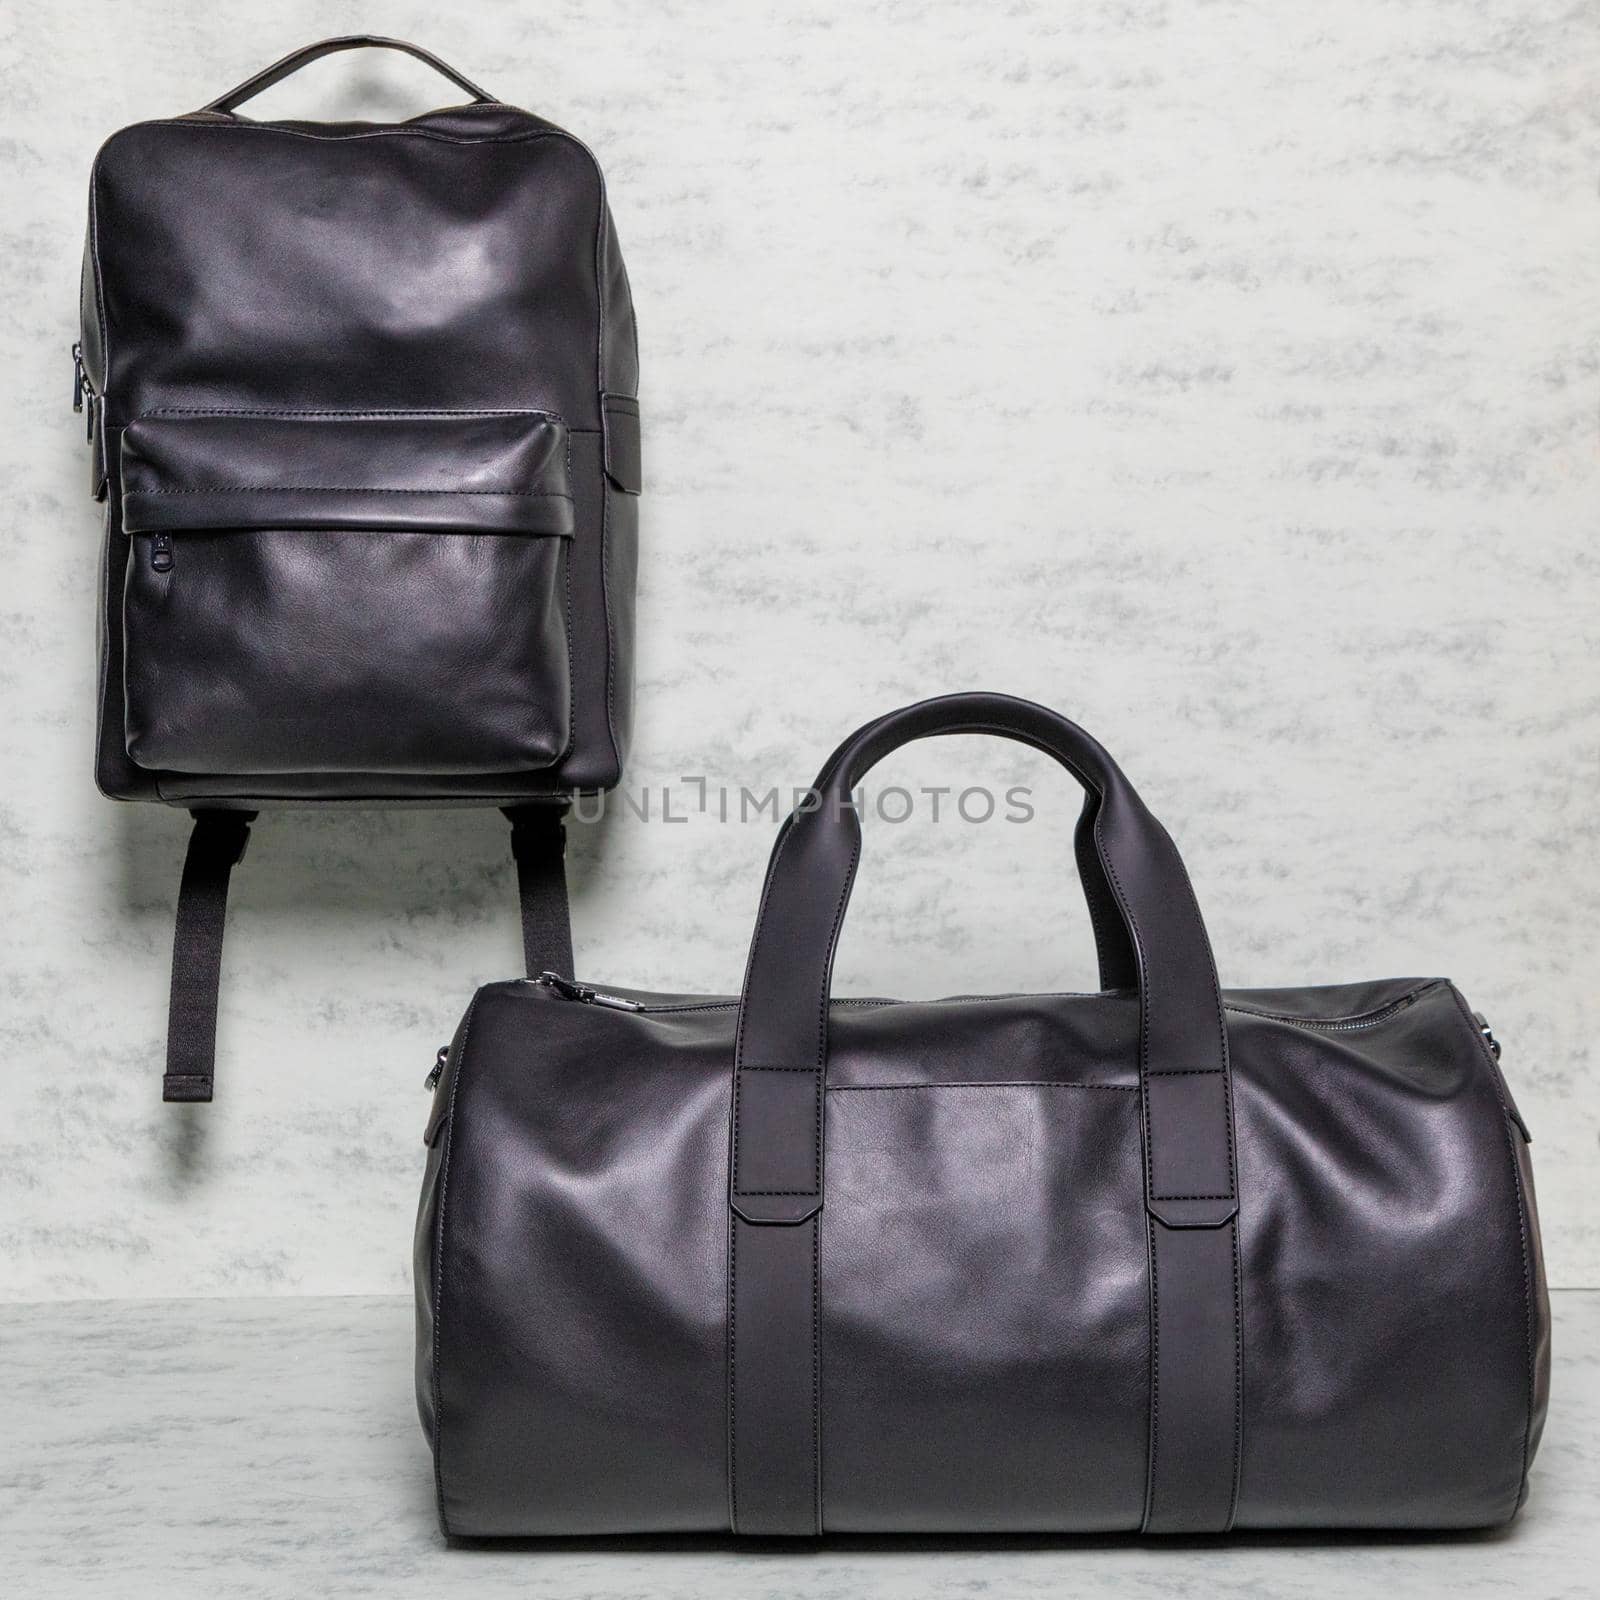 Black man handbag and backpack isolated